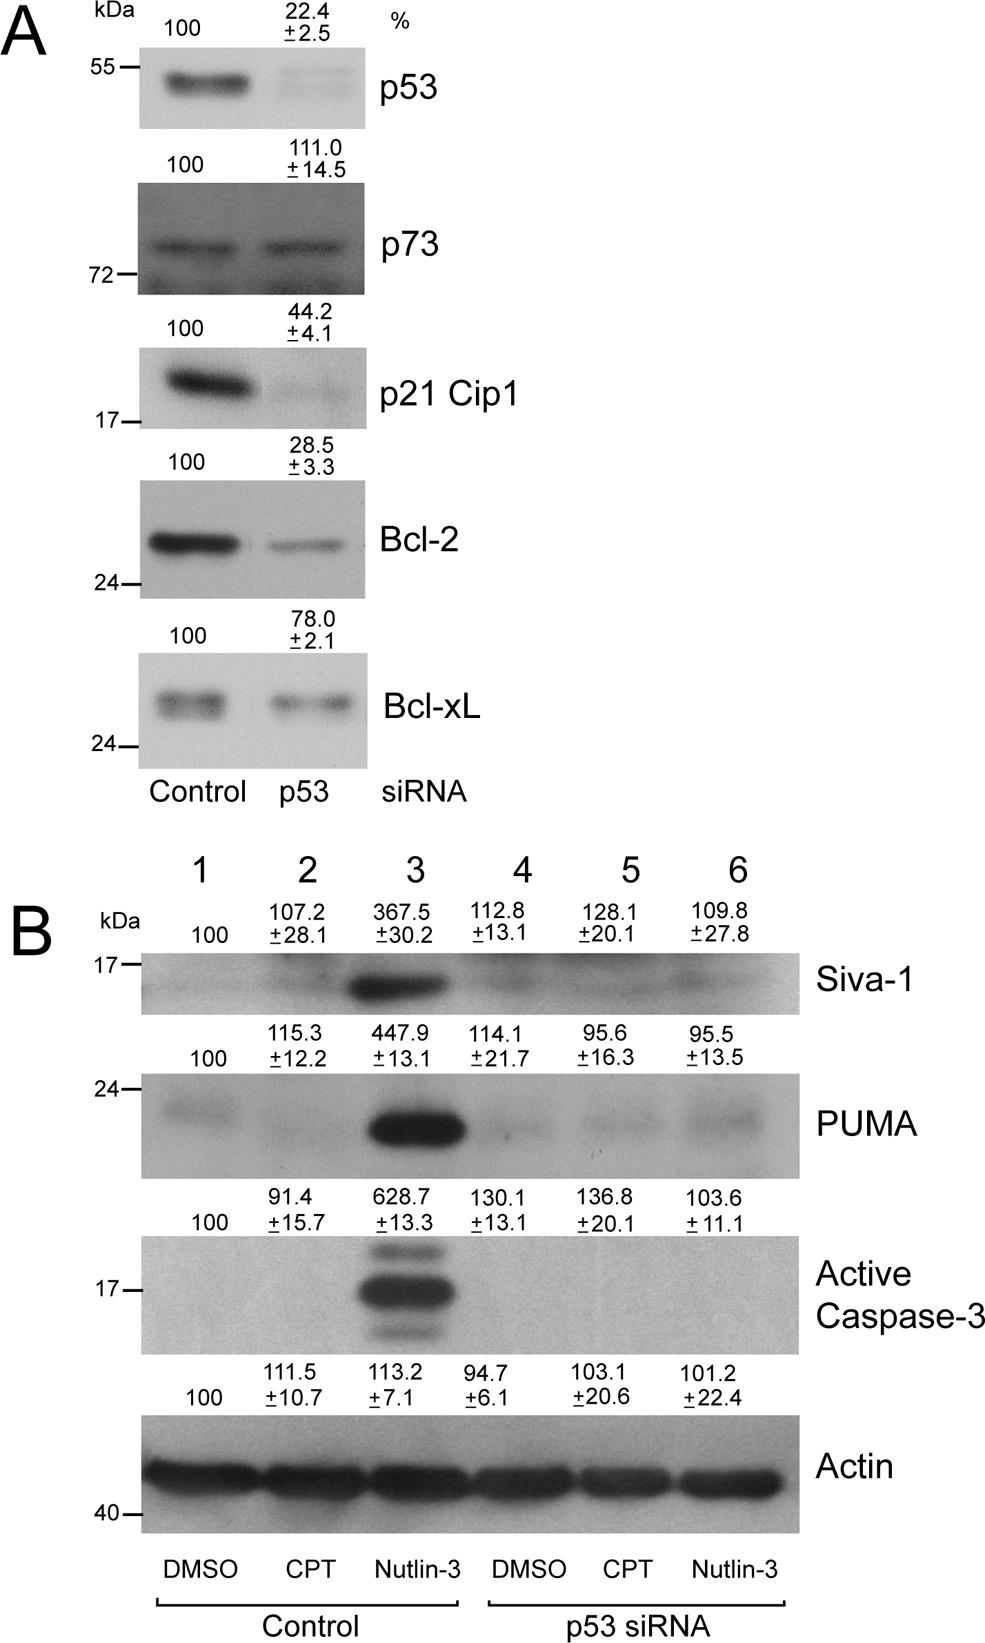 IOVS, May 2011, Vol. 52, No. 6 Nutlin-3 Induces Apoptosis in RPE Cells 3377 caspases-9 and -3.